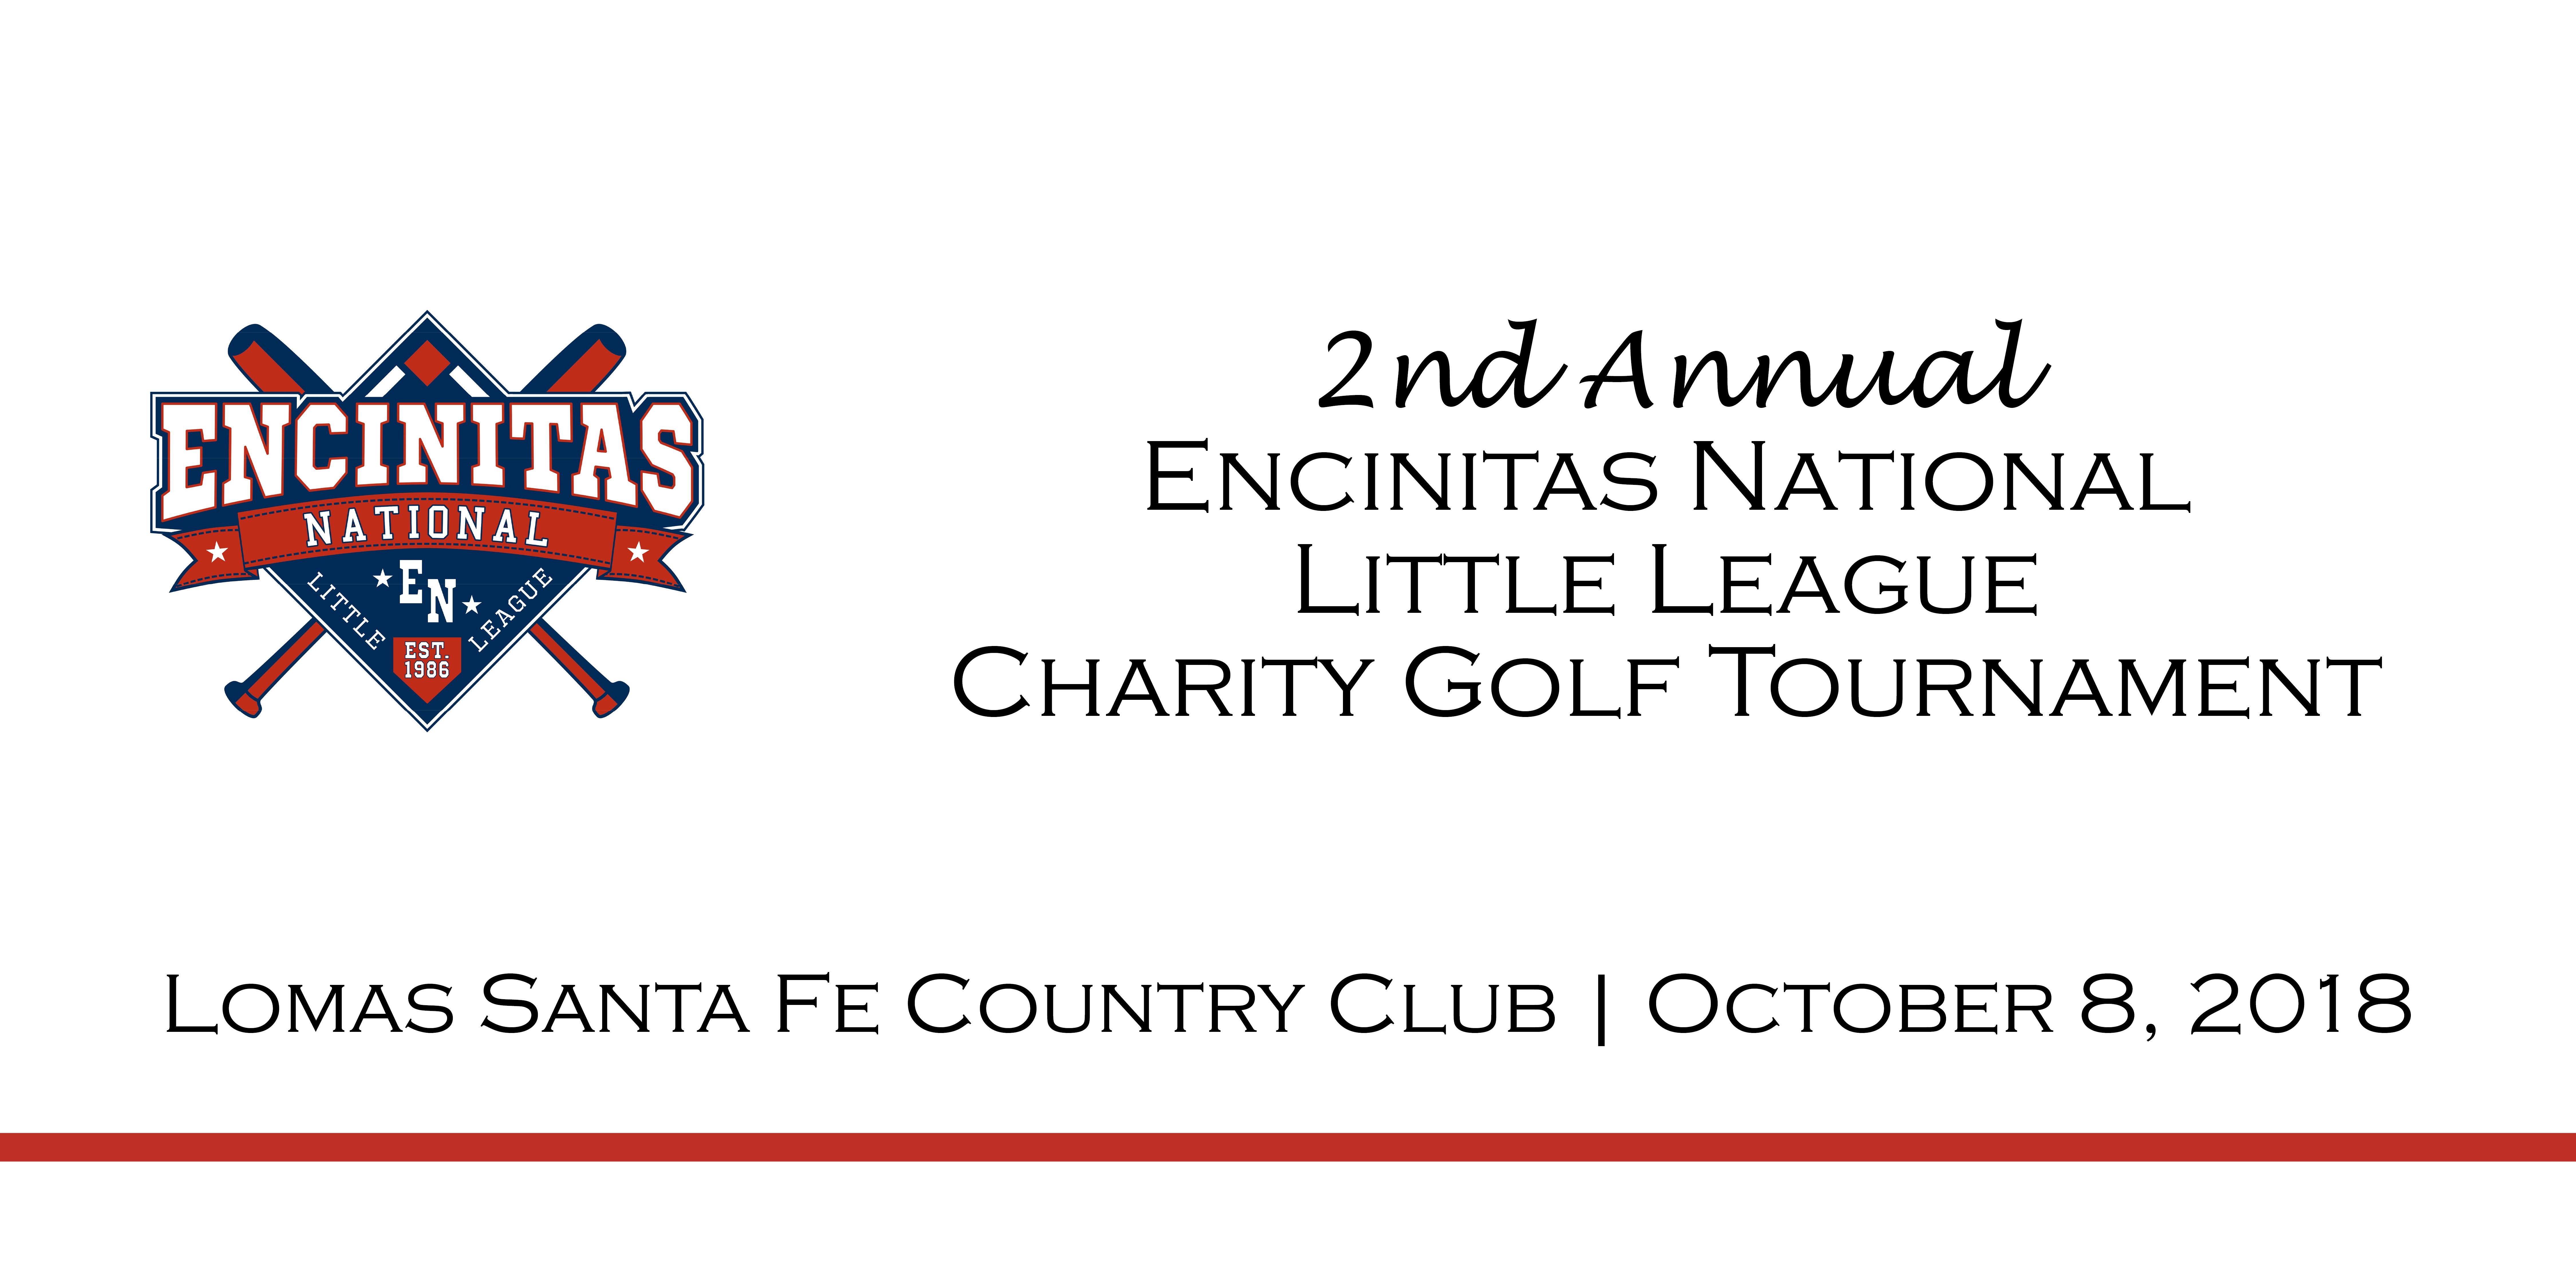 Encinitas National Little League 2nd Annual Charity Golf Tournament